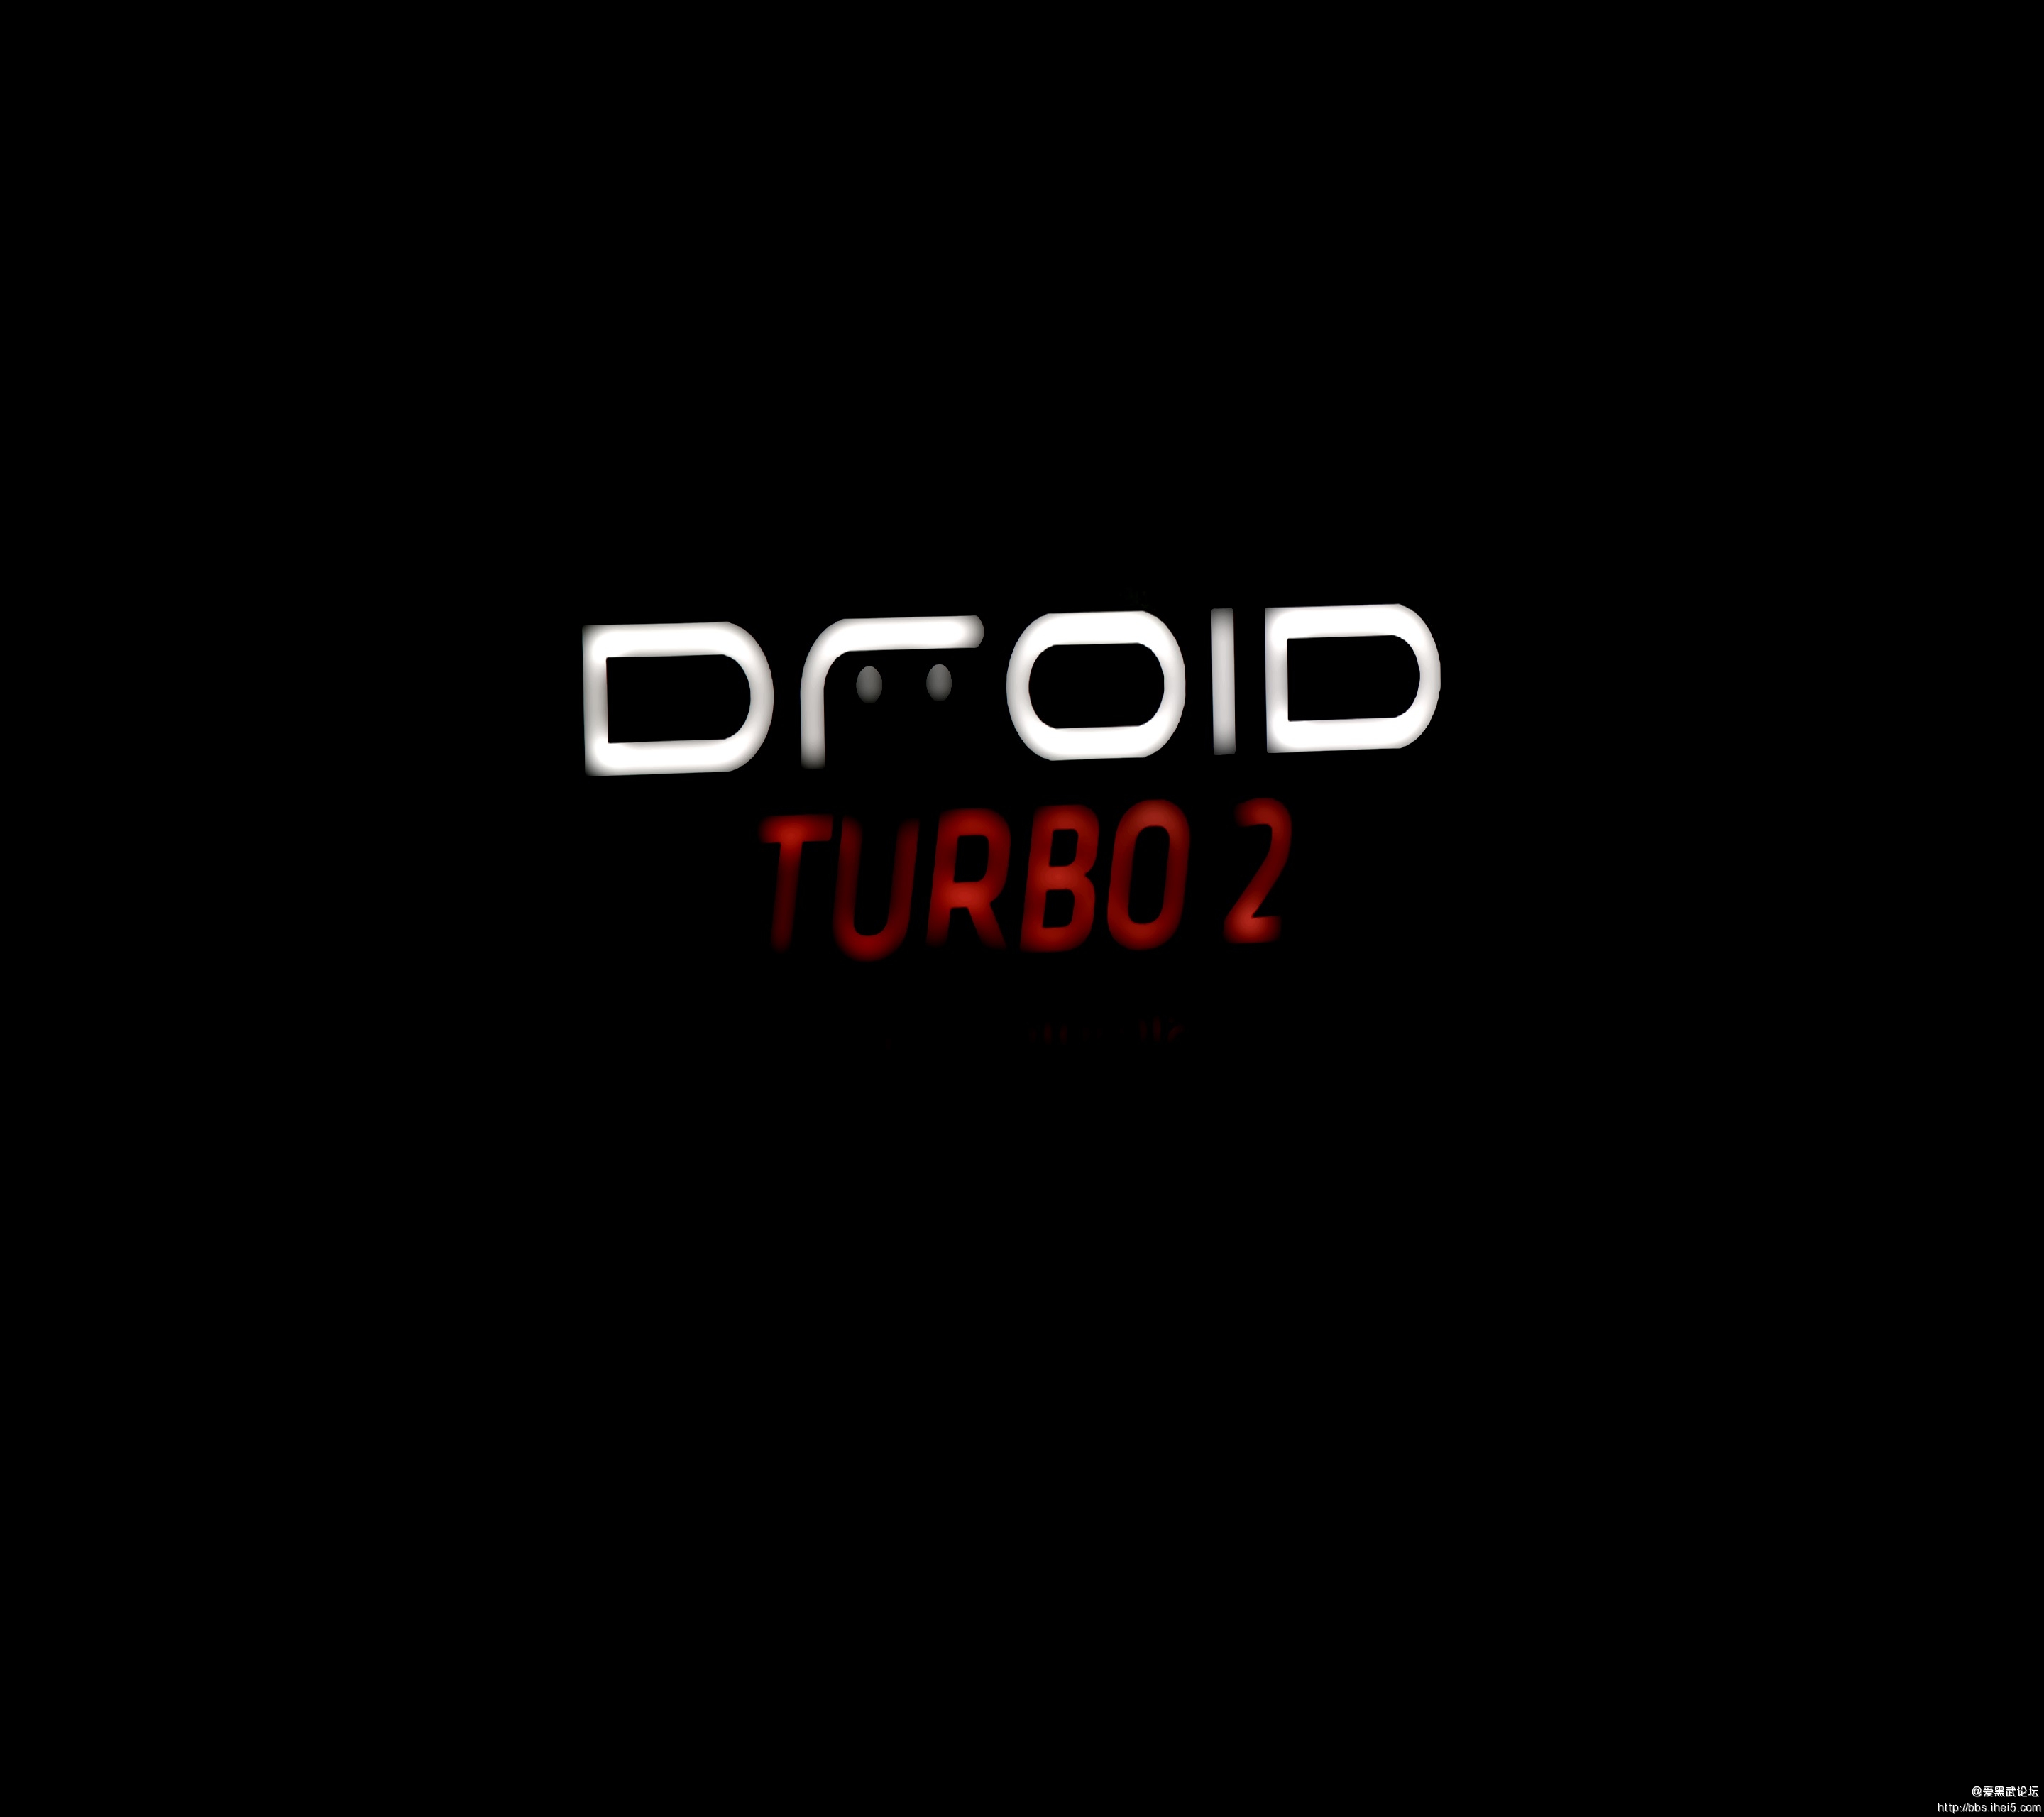 Droid_Turbo_2-wallpaper-10796437.jpg